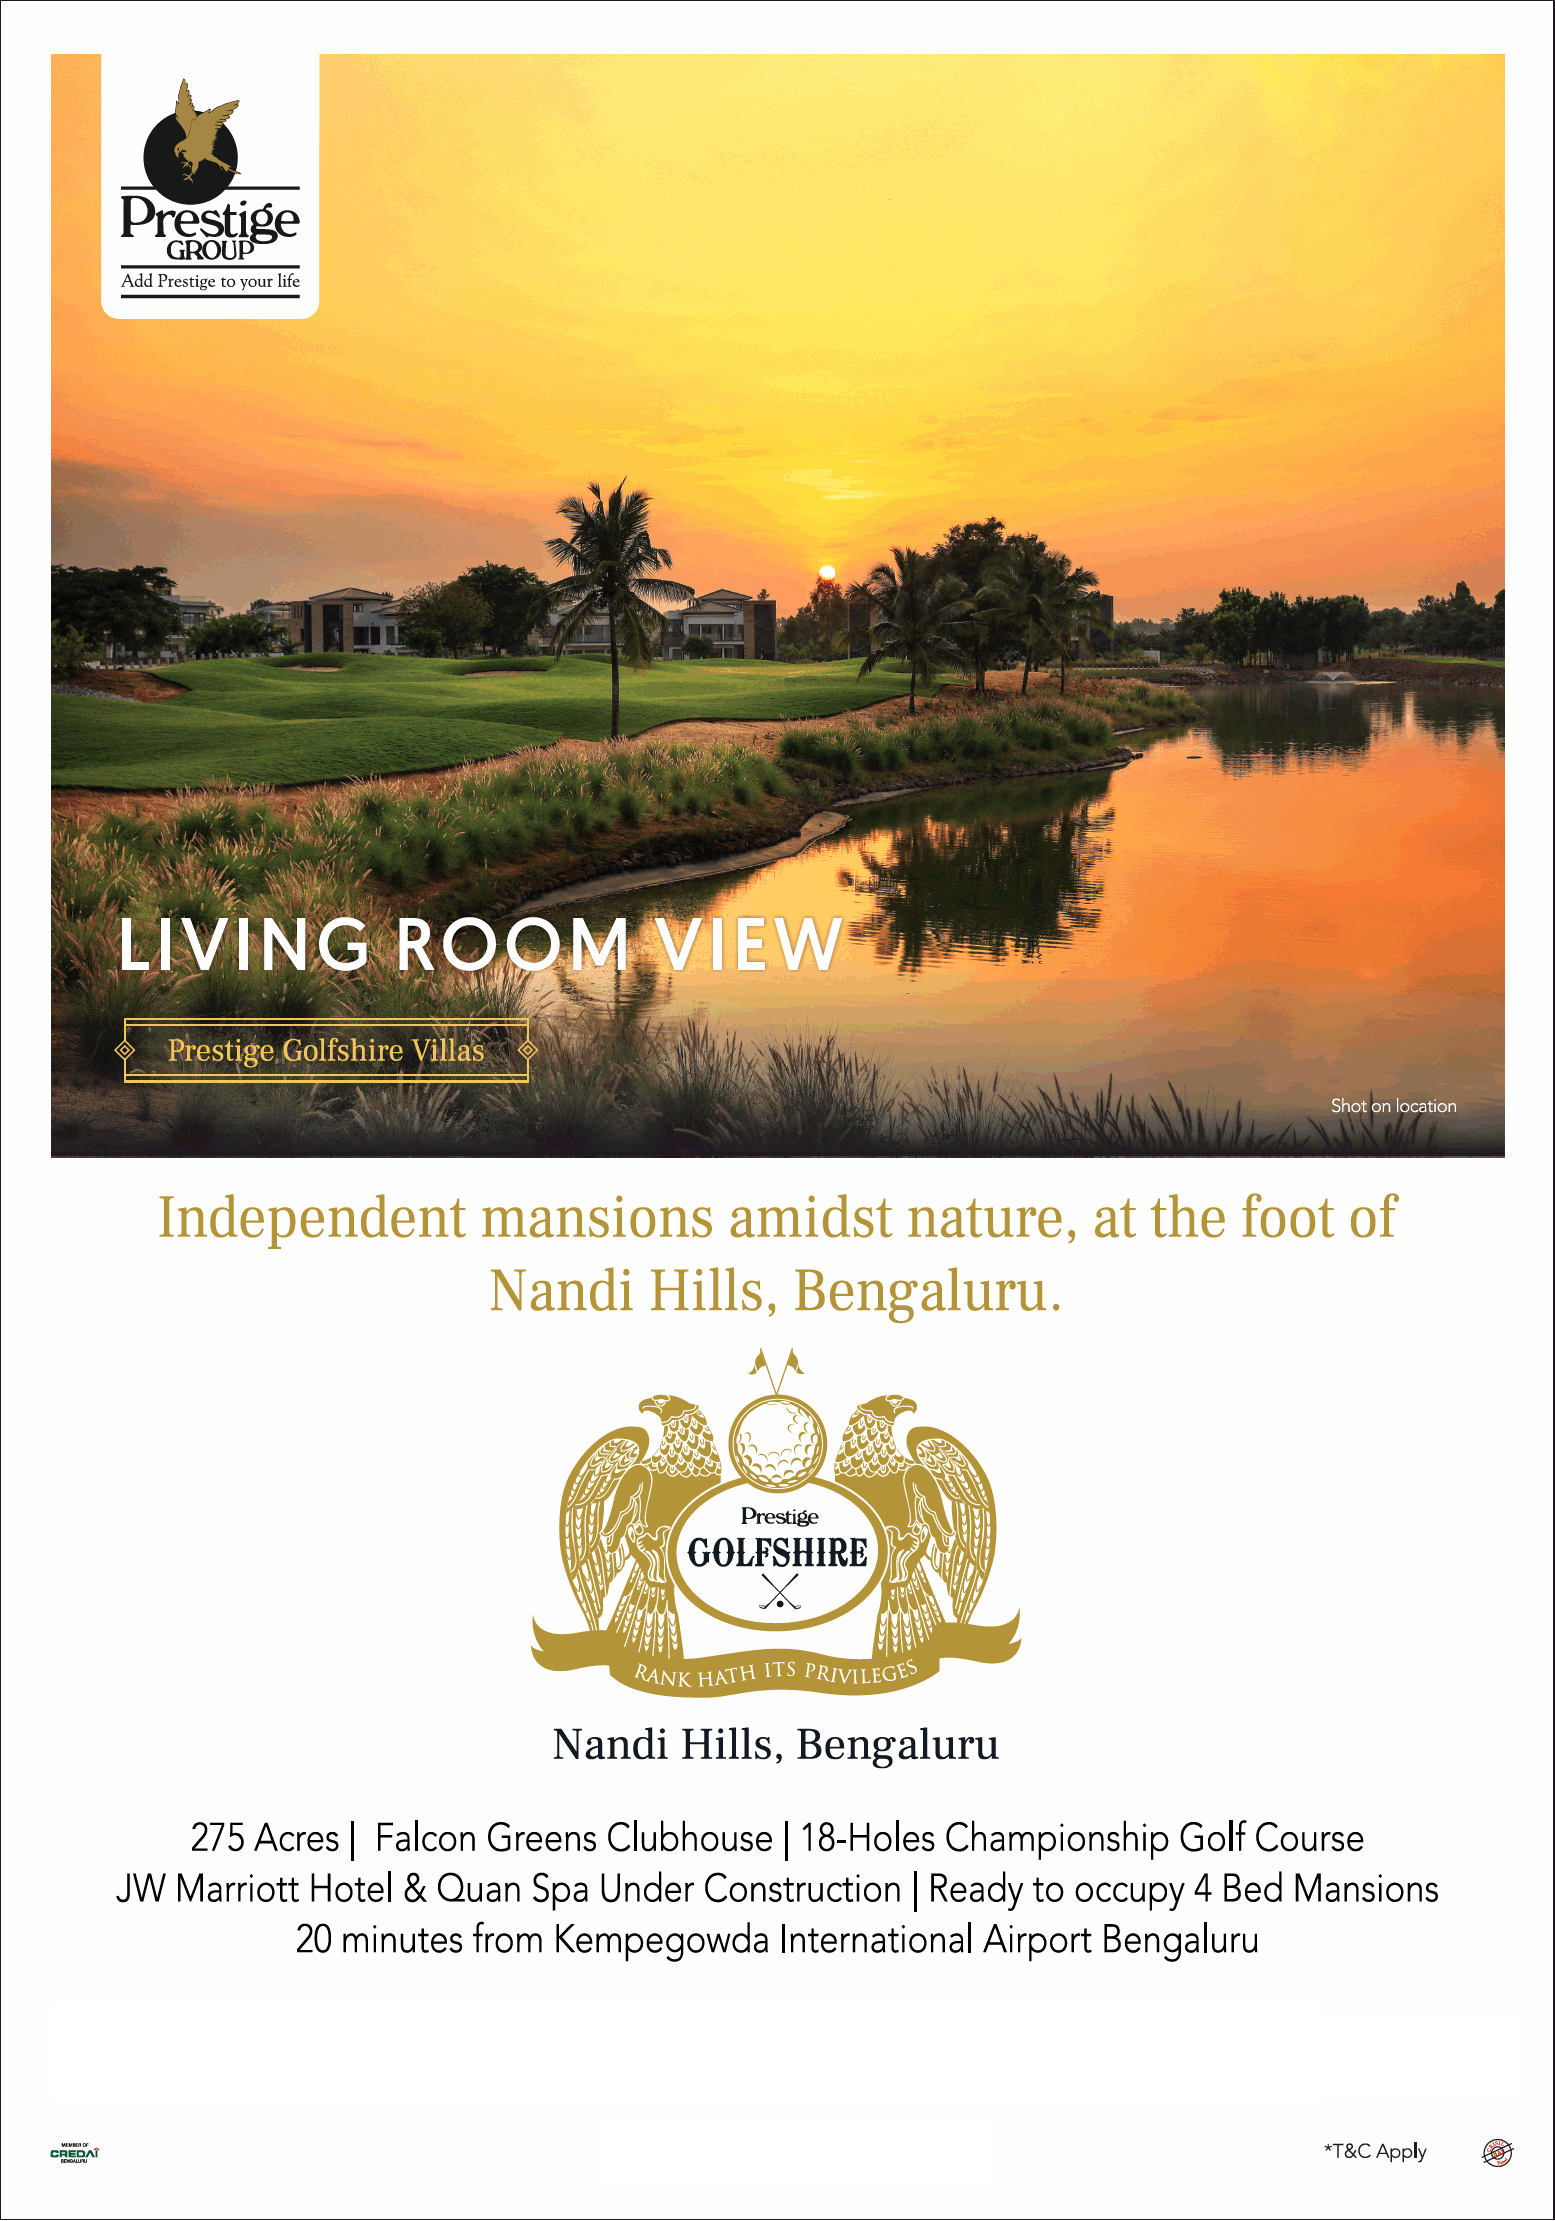 Living room view at Prestige Golfshire in Nandhi Hills, Bangalore Update